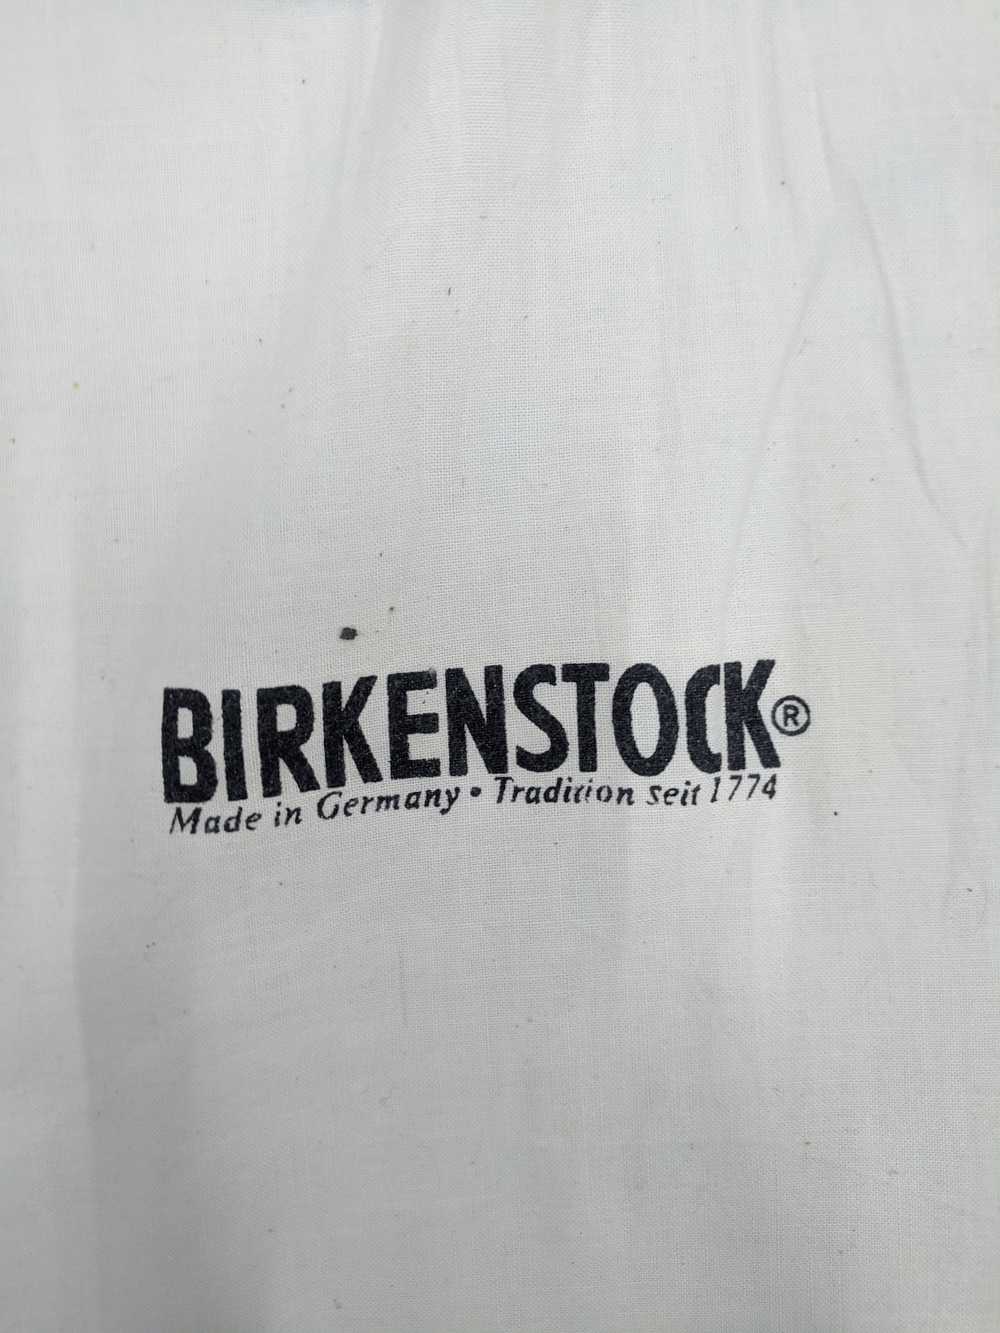 Birkenstock Tote Bag - image 2